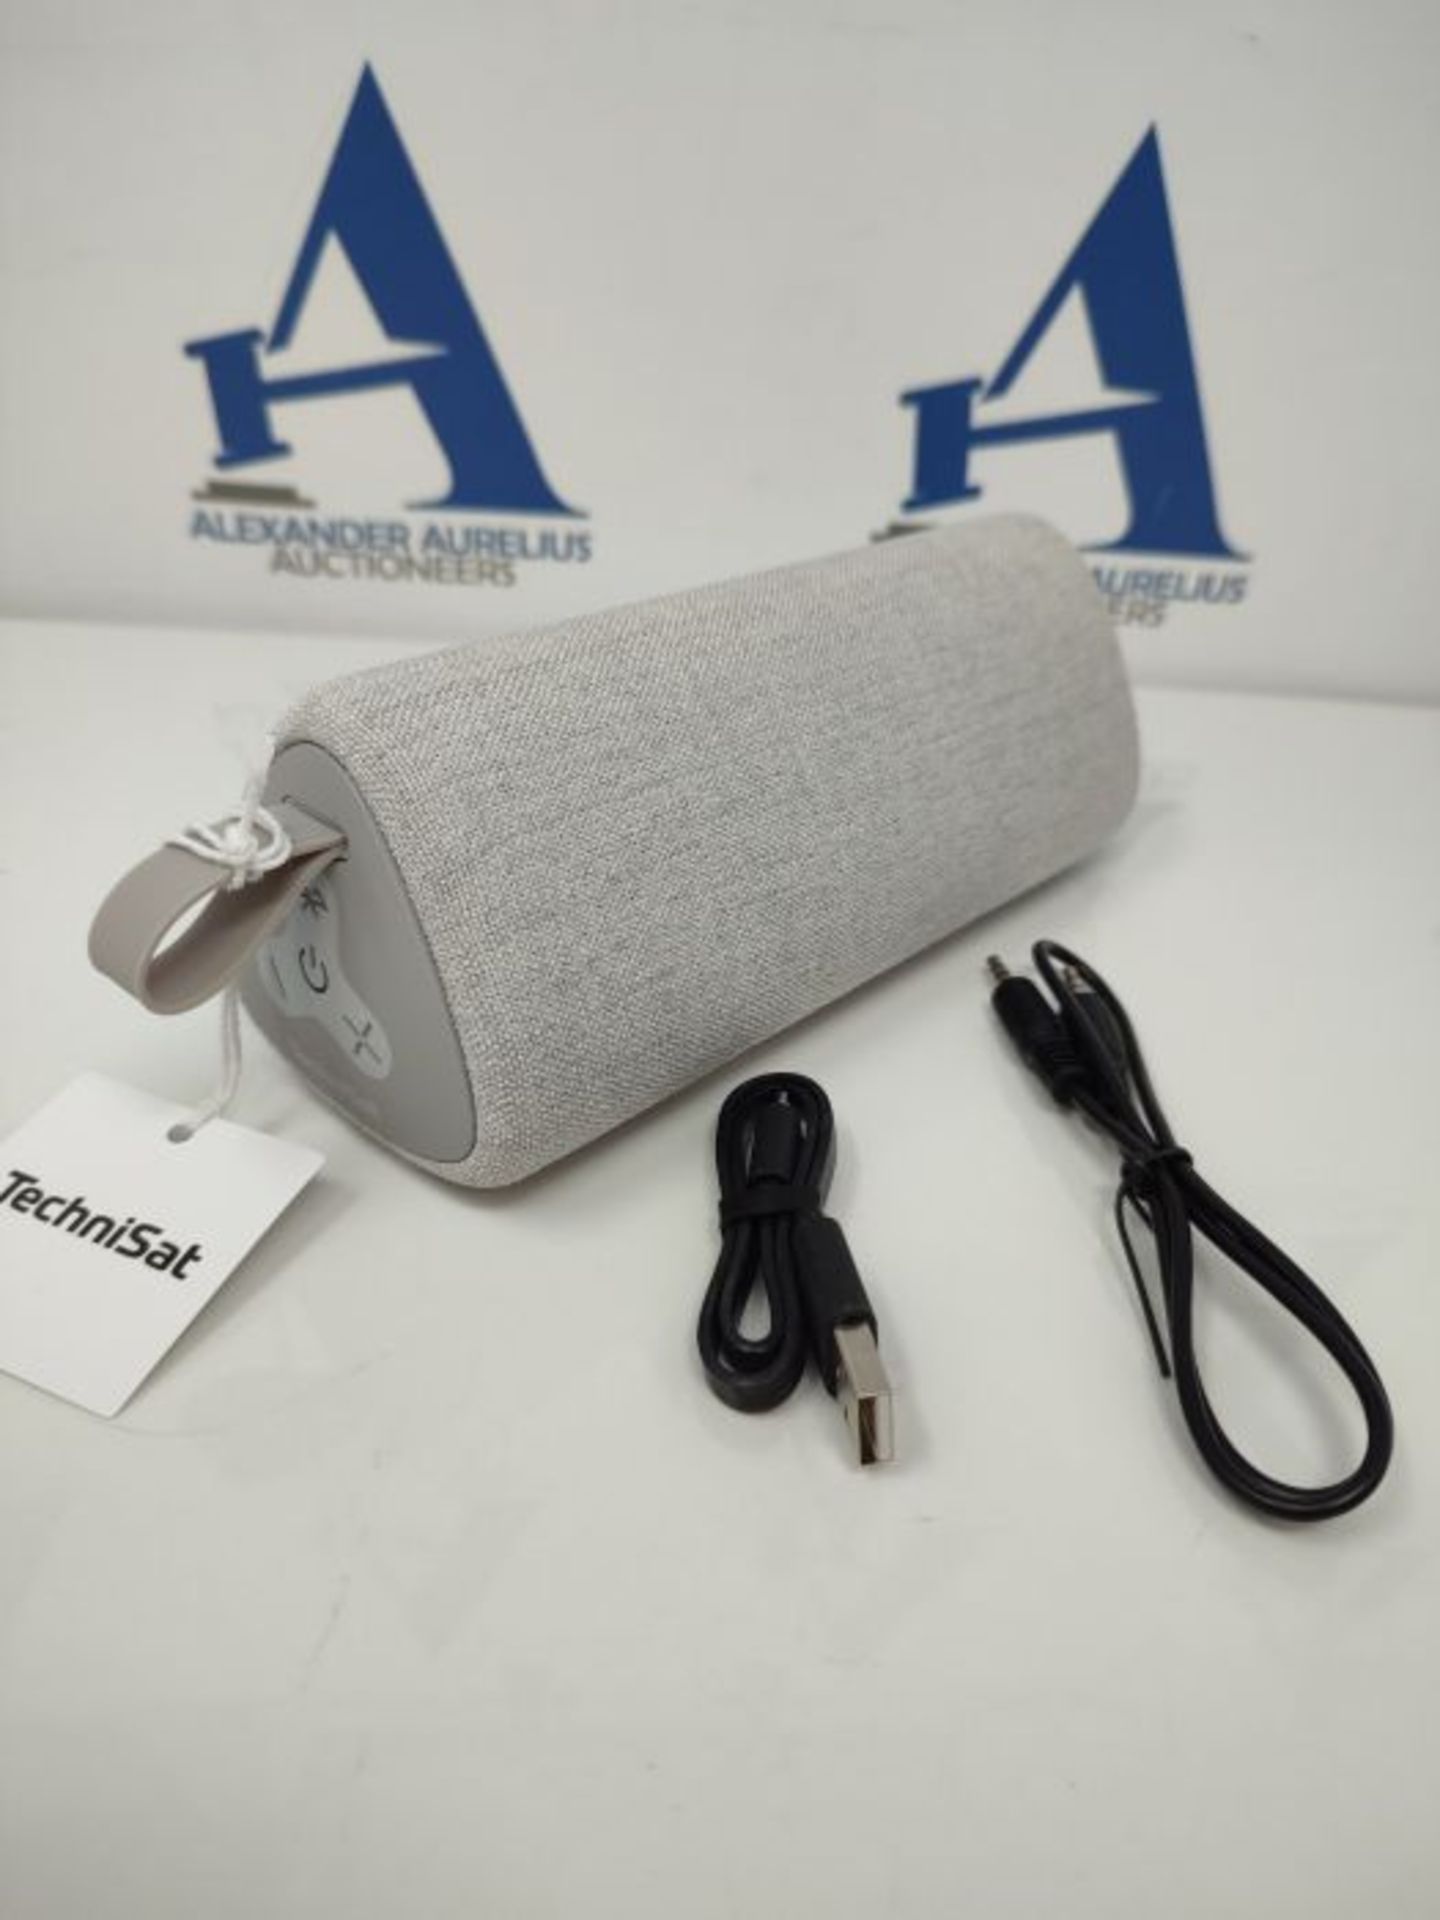 Technisat Bluspeaker TWS/Portable Bluetooth Speaker with True Wireless Stereo Bluetoot - Image 3 of 3